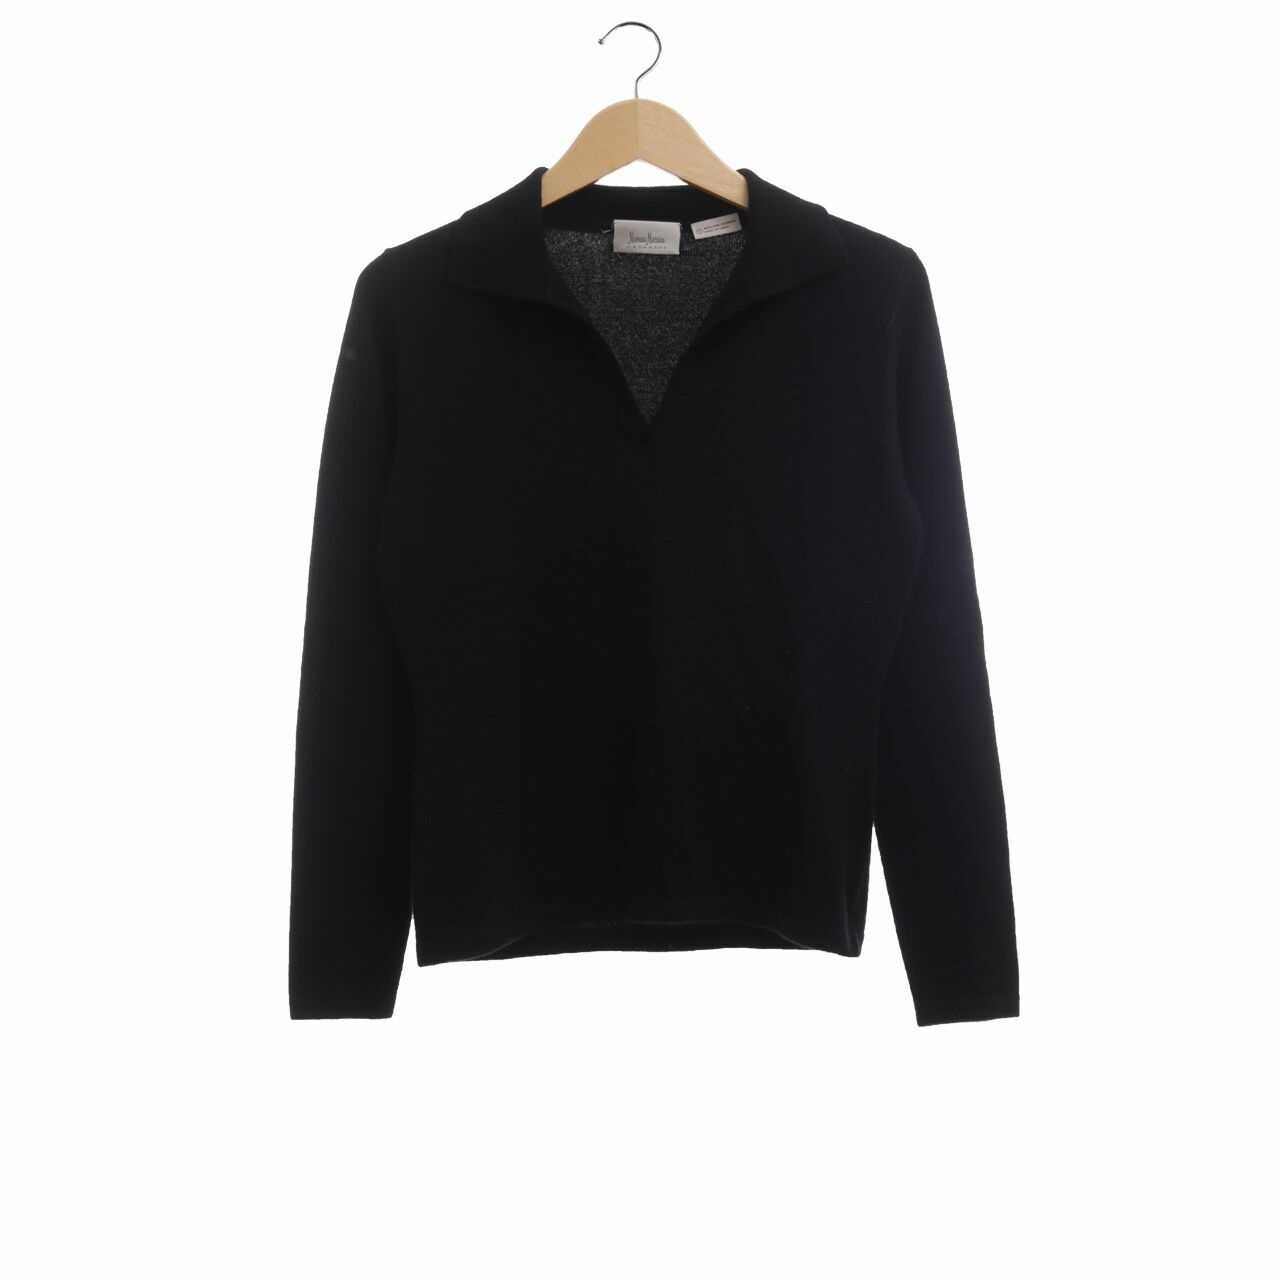  Neiman Marcus Cashmere Black Sweater